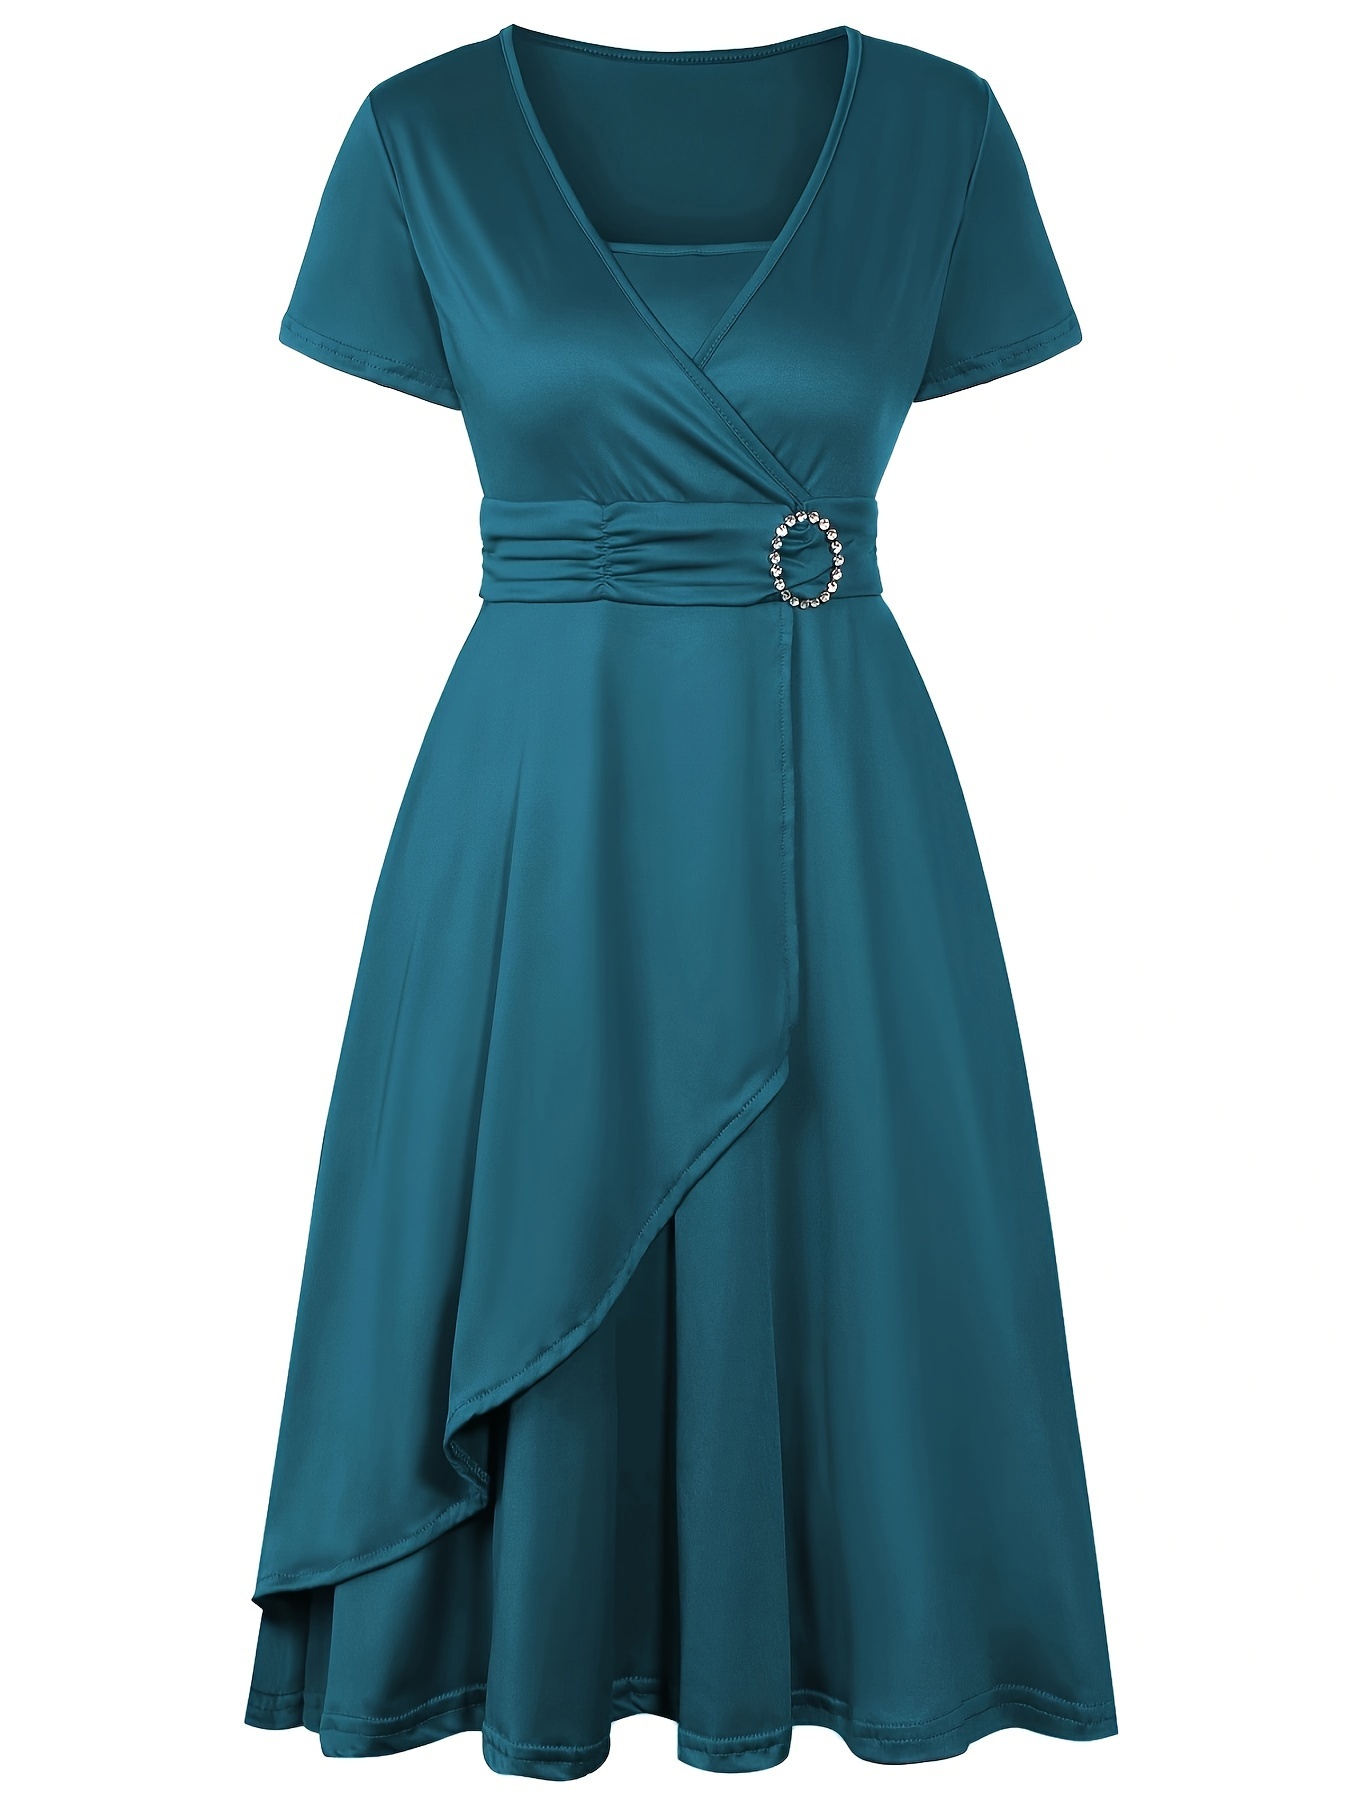 elegant skinny rhinestoned dress asymmetrical hem tie waist dress for party banquet womens clothing